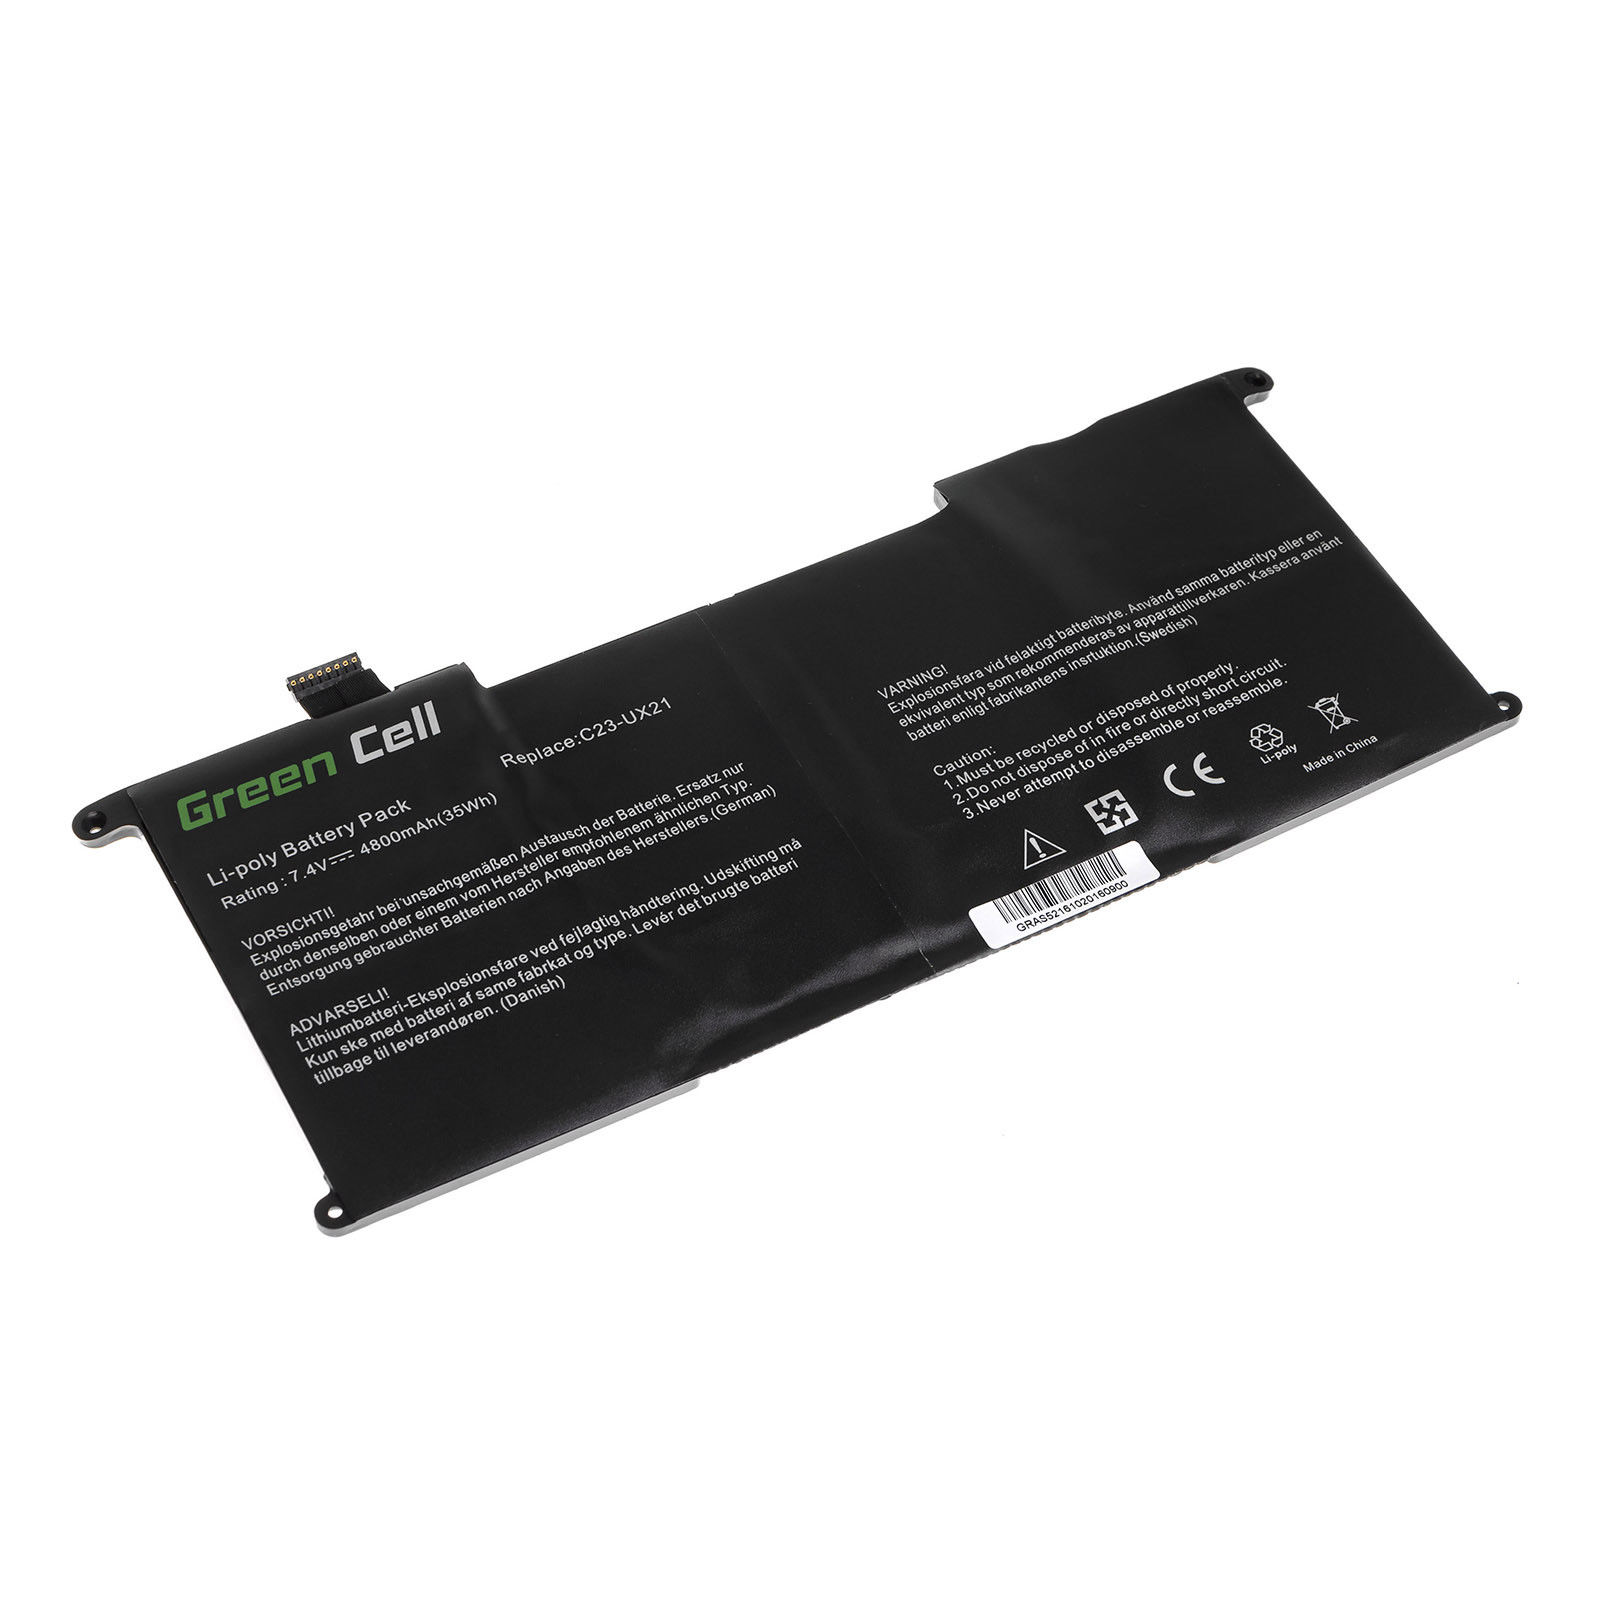 Asus ZenBook UX21A-1AK3 UX21A-K1004H UX21A-K1009H compatible battery